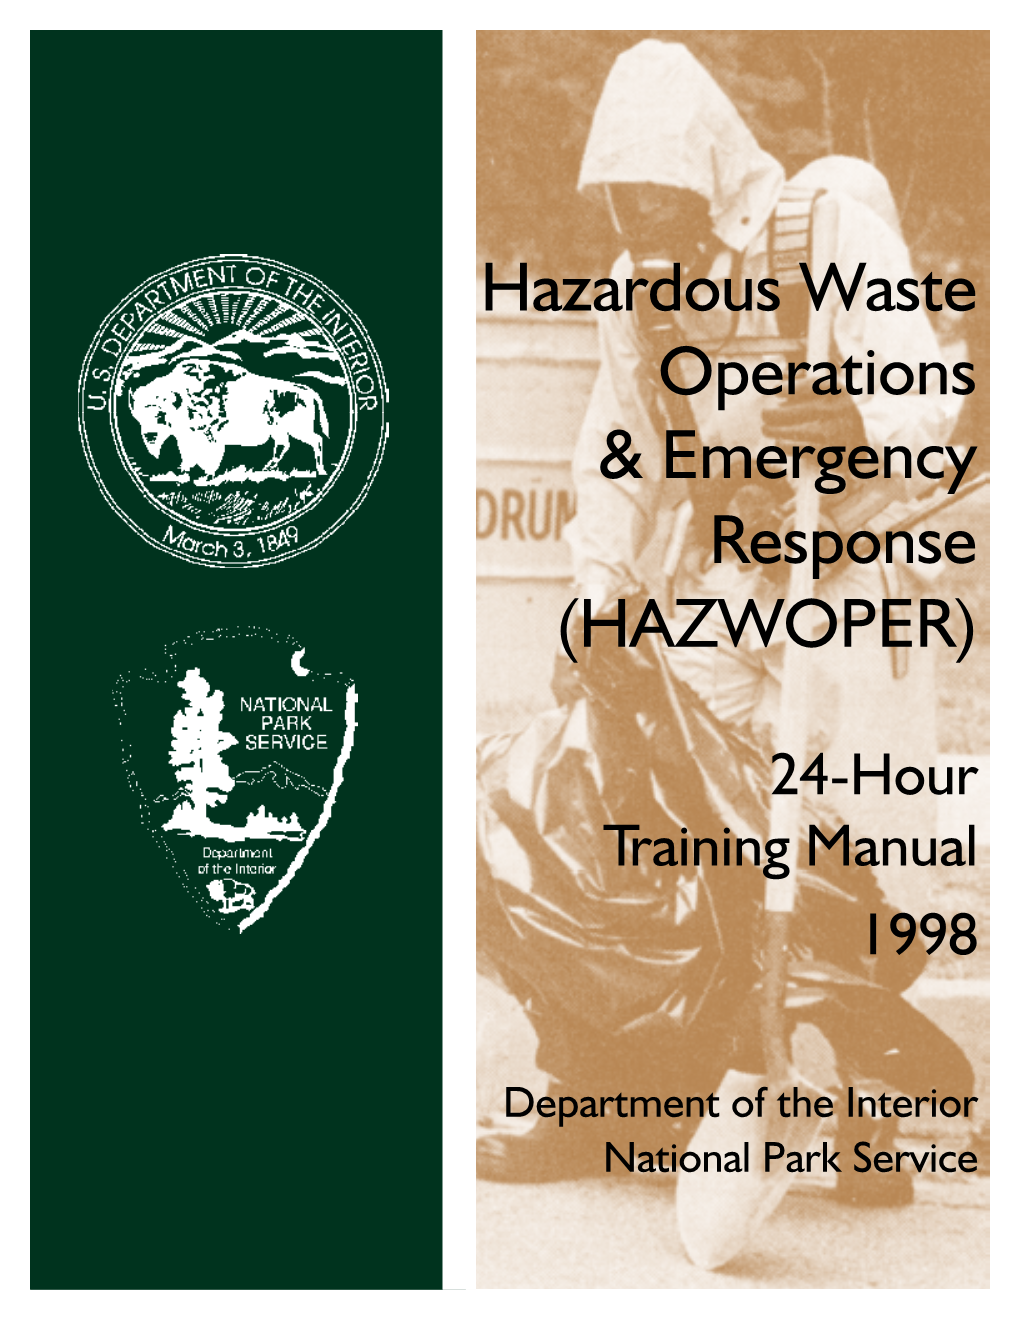 Hazardous Waste Operations & Emergency Response (HAZWOPER)